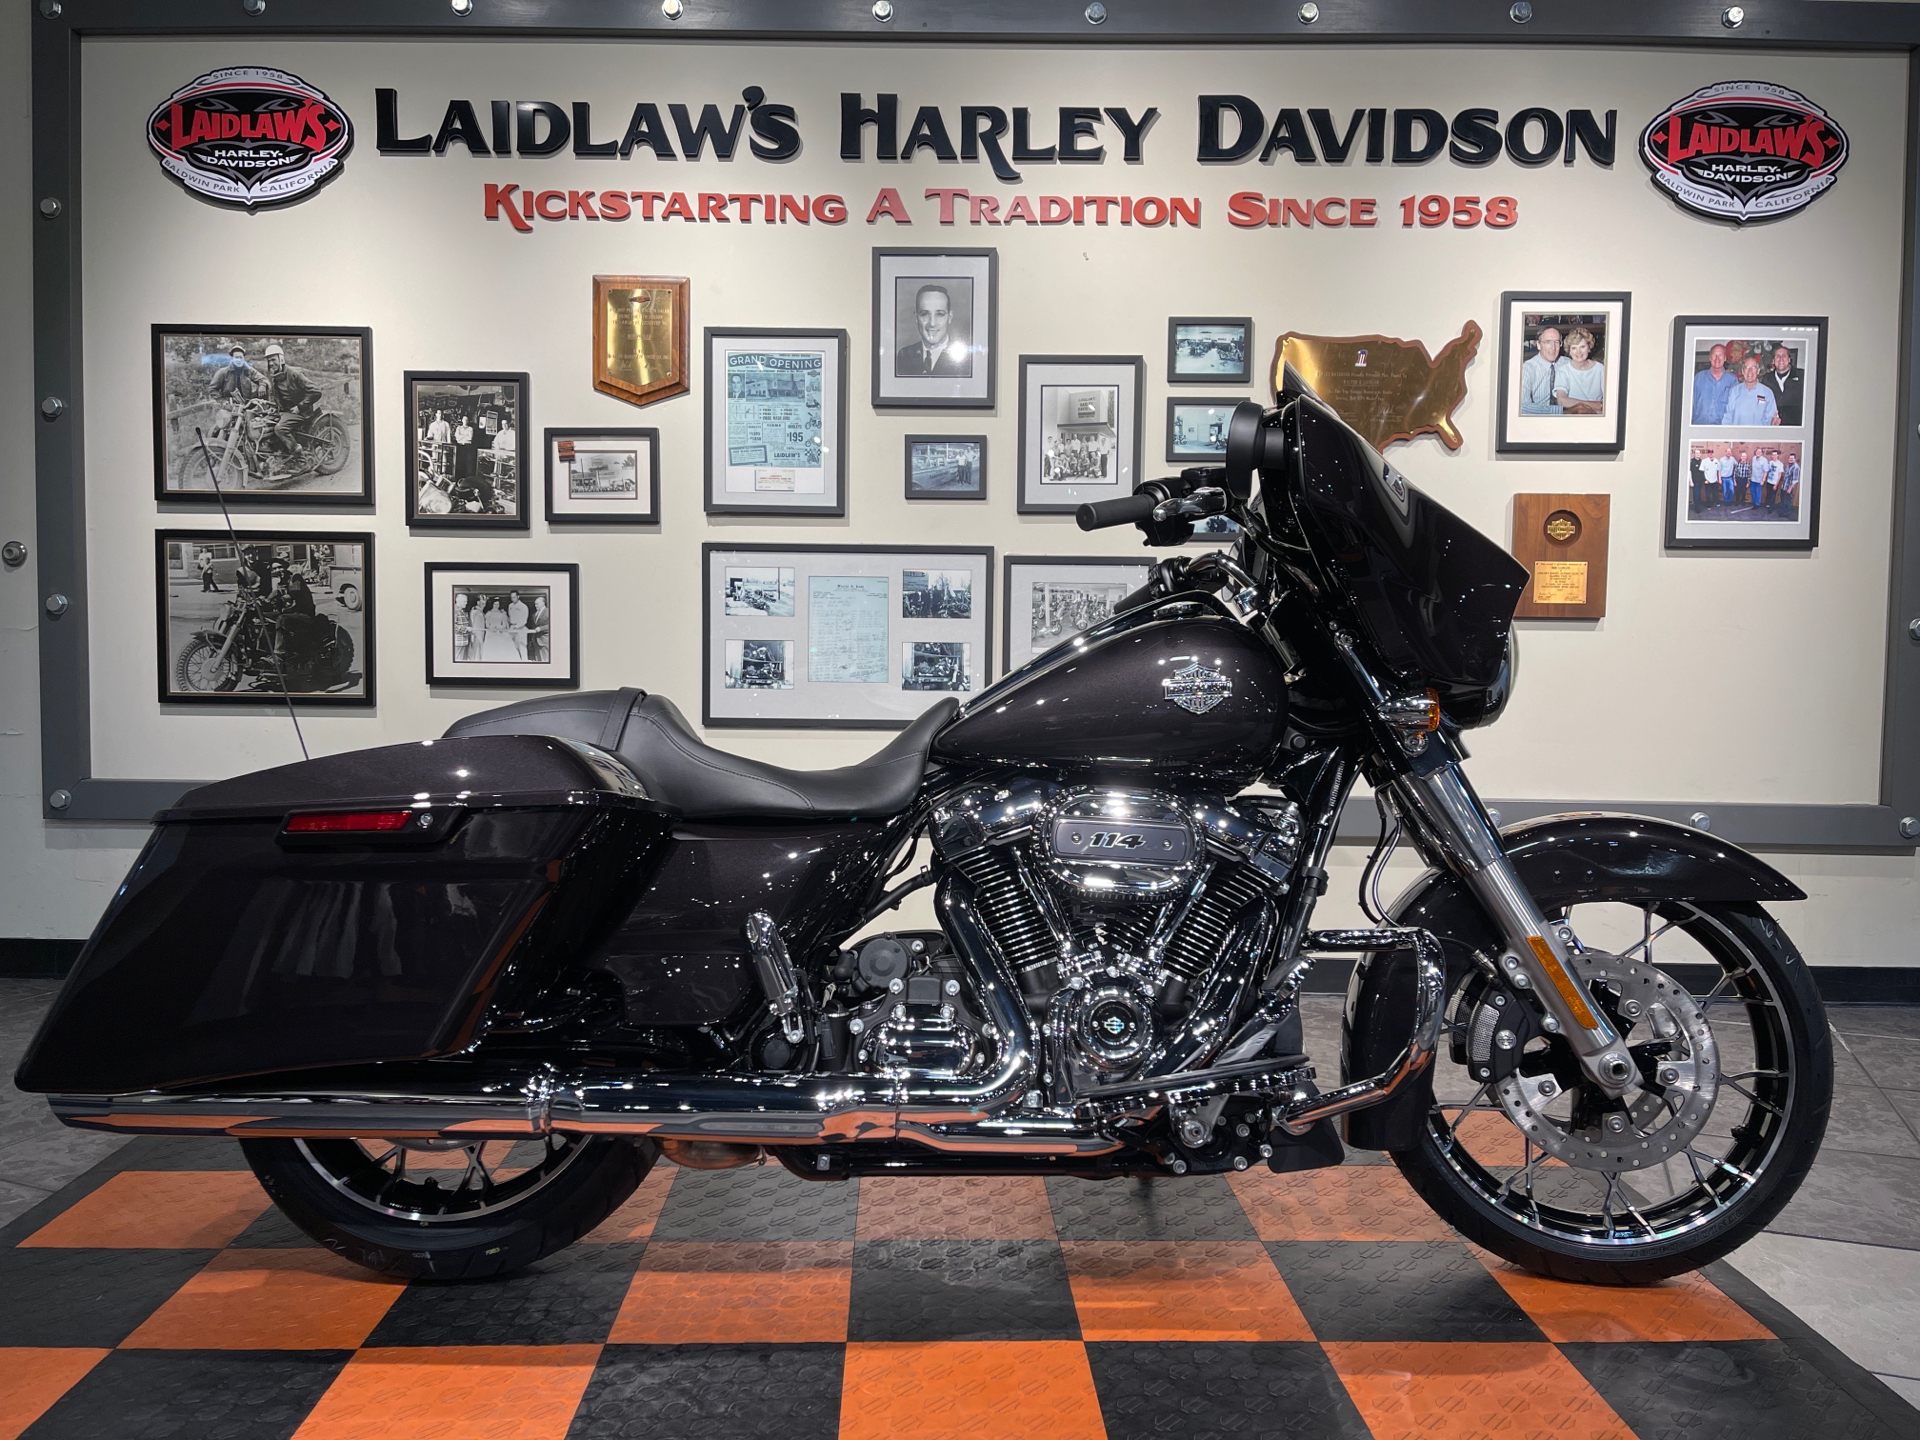 New 2021 Harley Davidson Street Glide Special Black Jack Metallic Chrome Option Baldwin Park Ca 28920